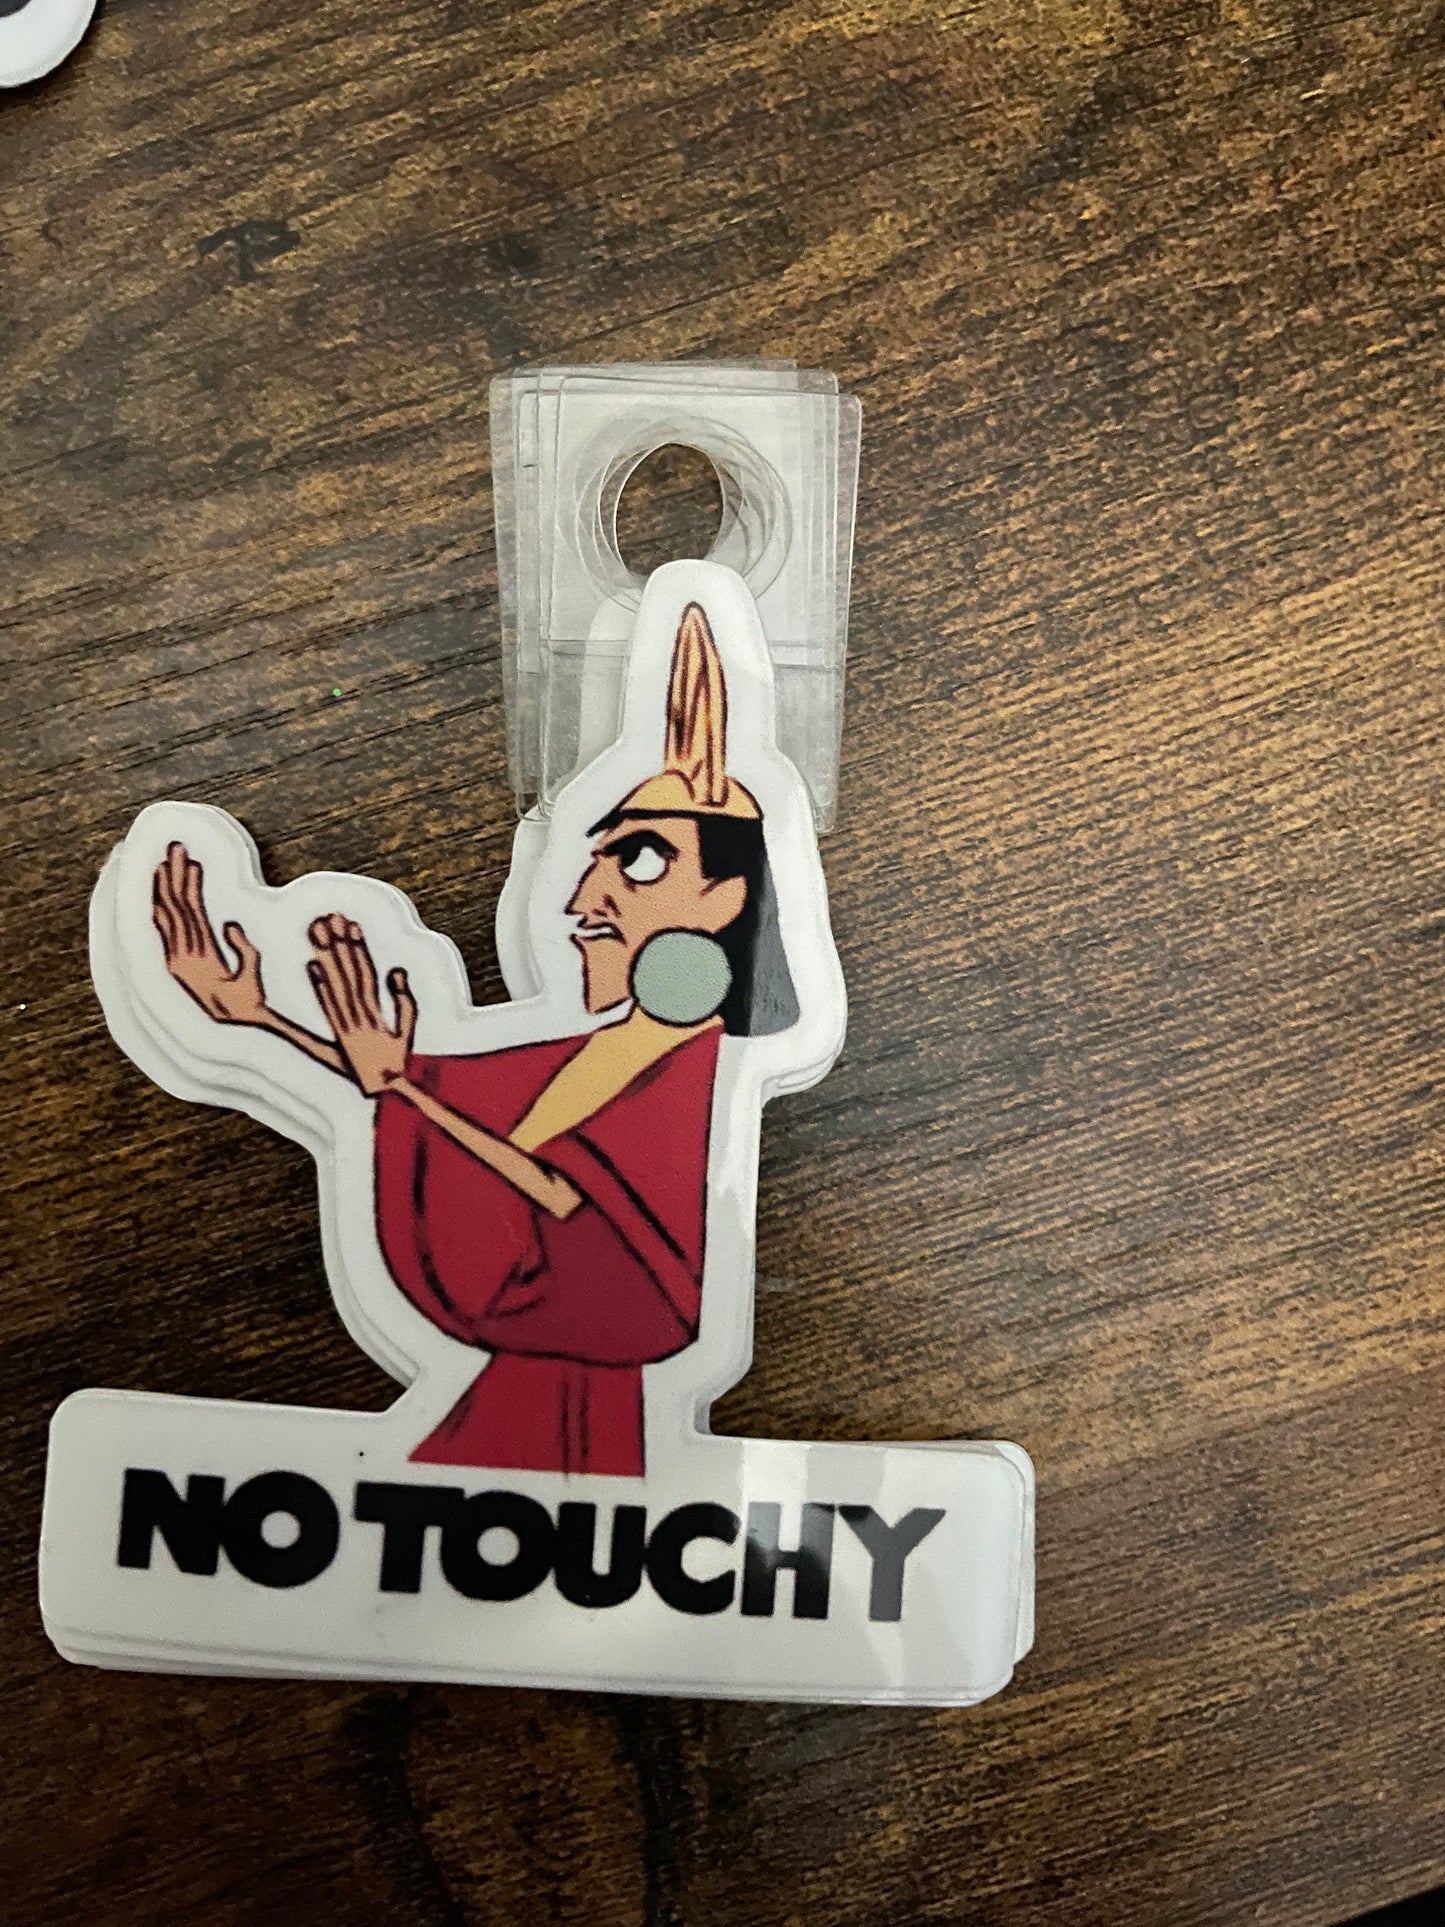 No touchy